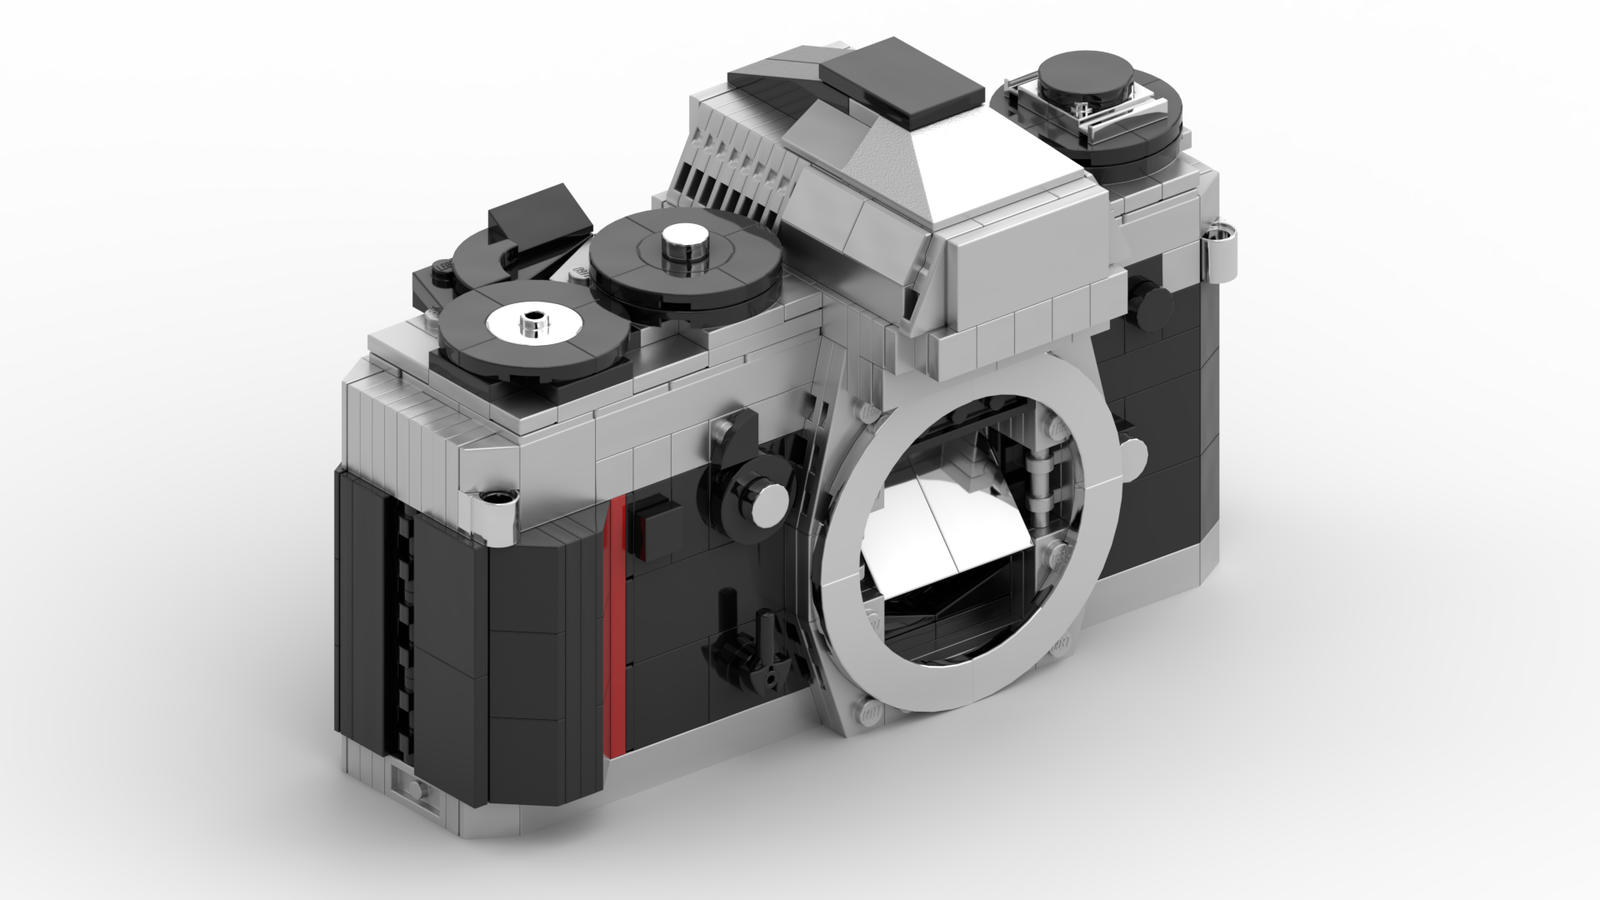 Support this Lego Nikon F3 film SLR camera at Ideas.Lego - Nikon